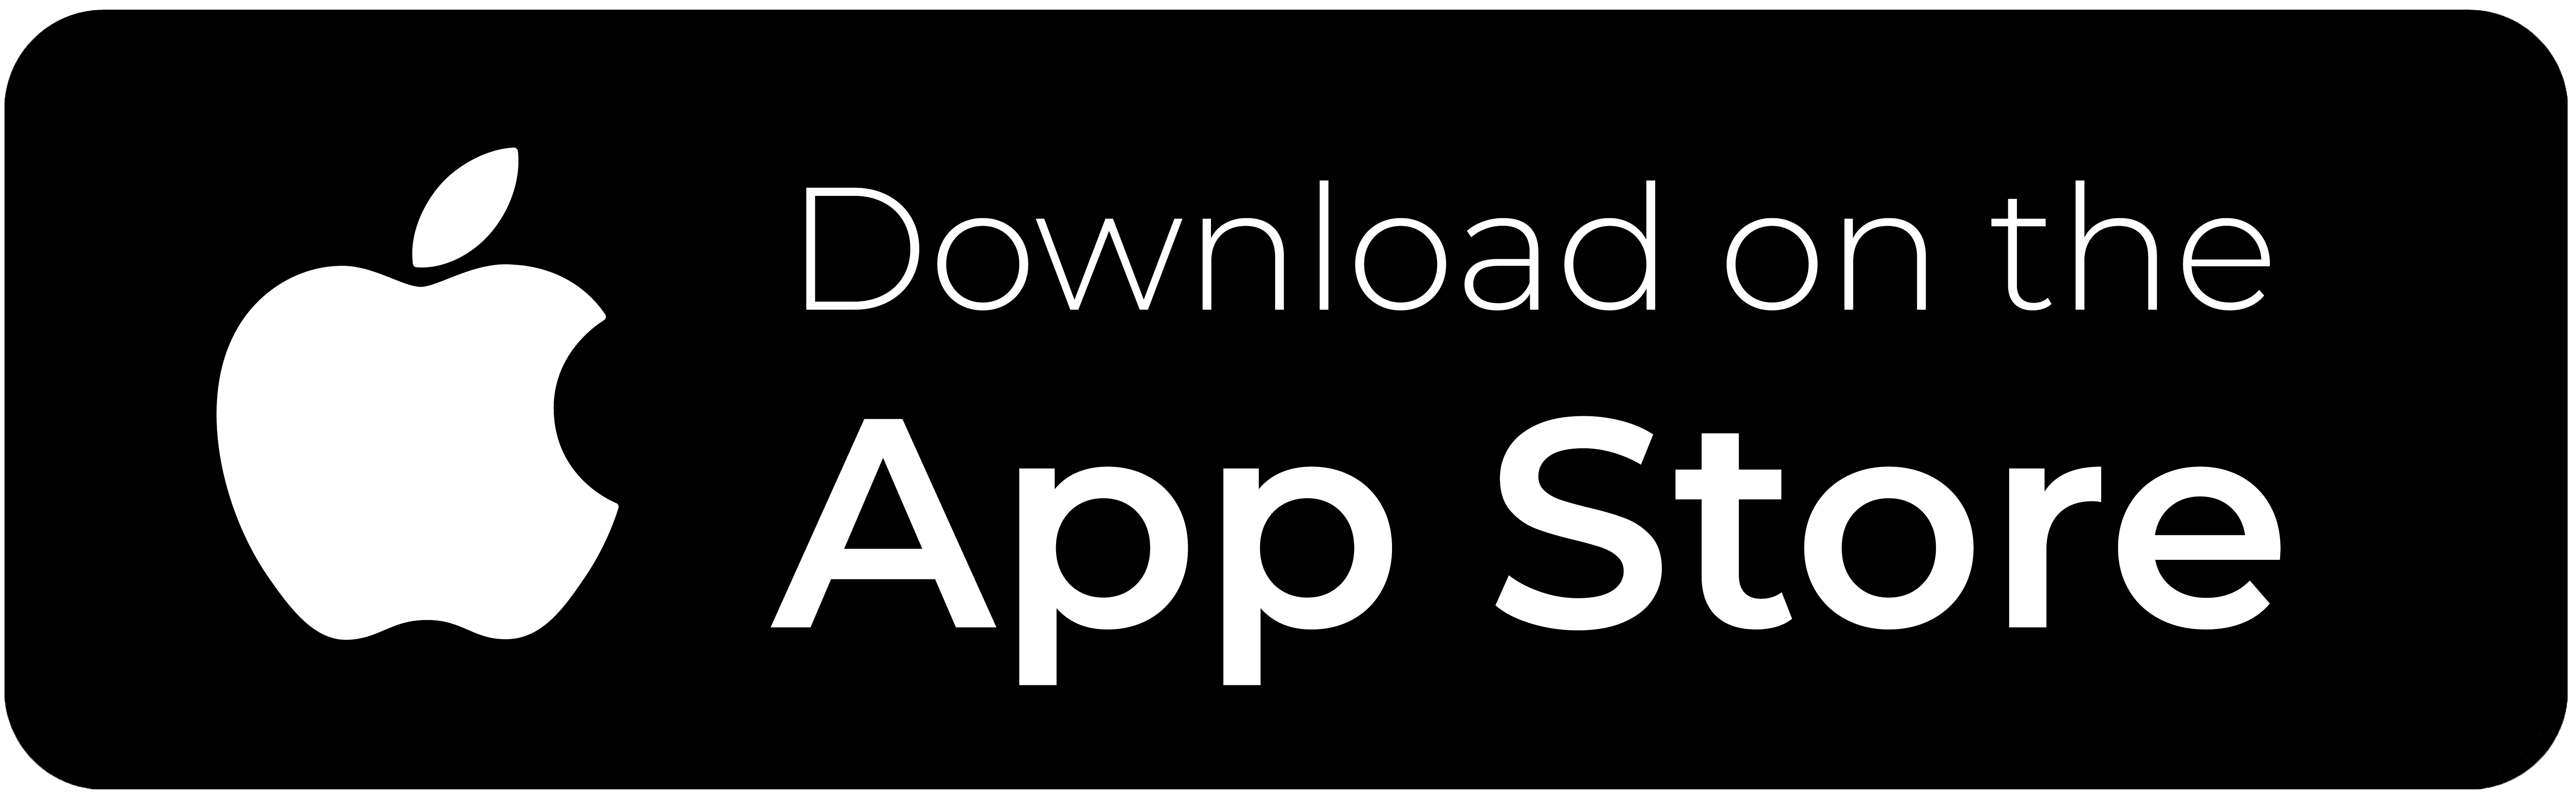 Last ned app i App store.